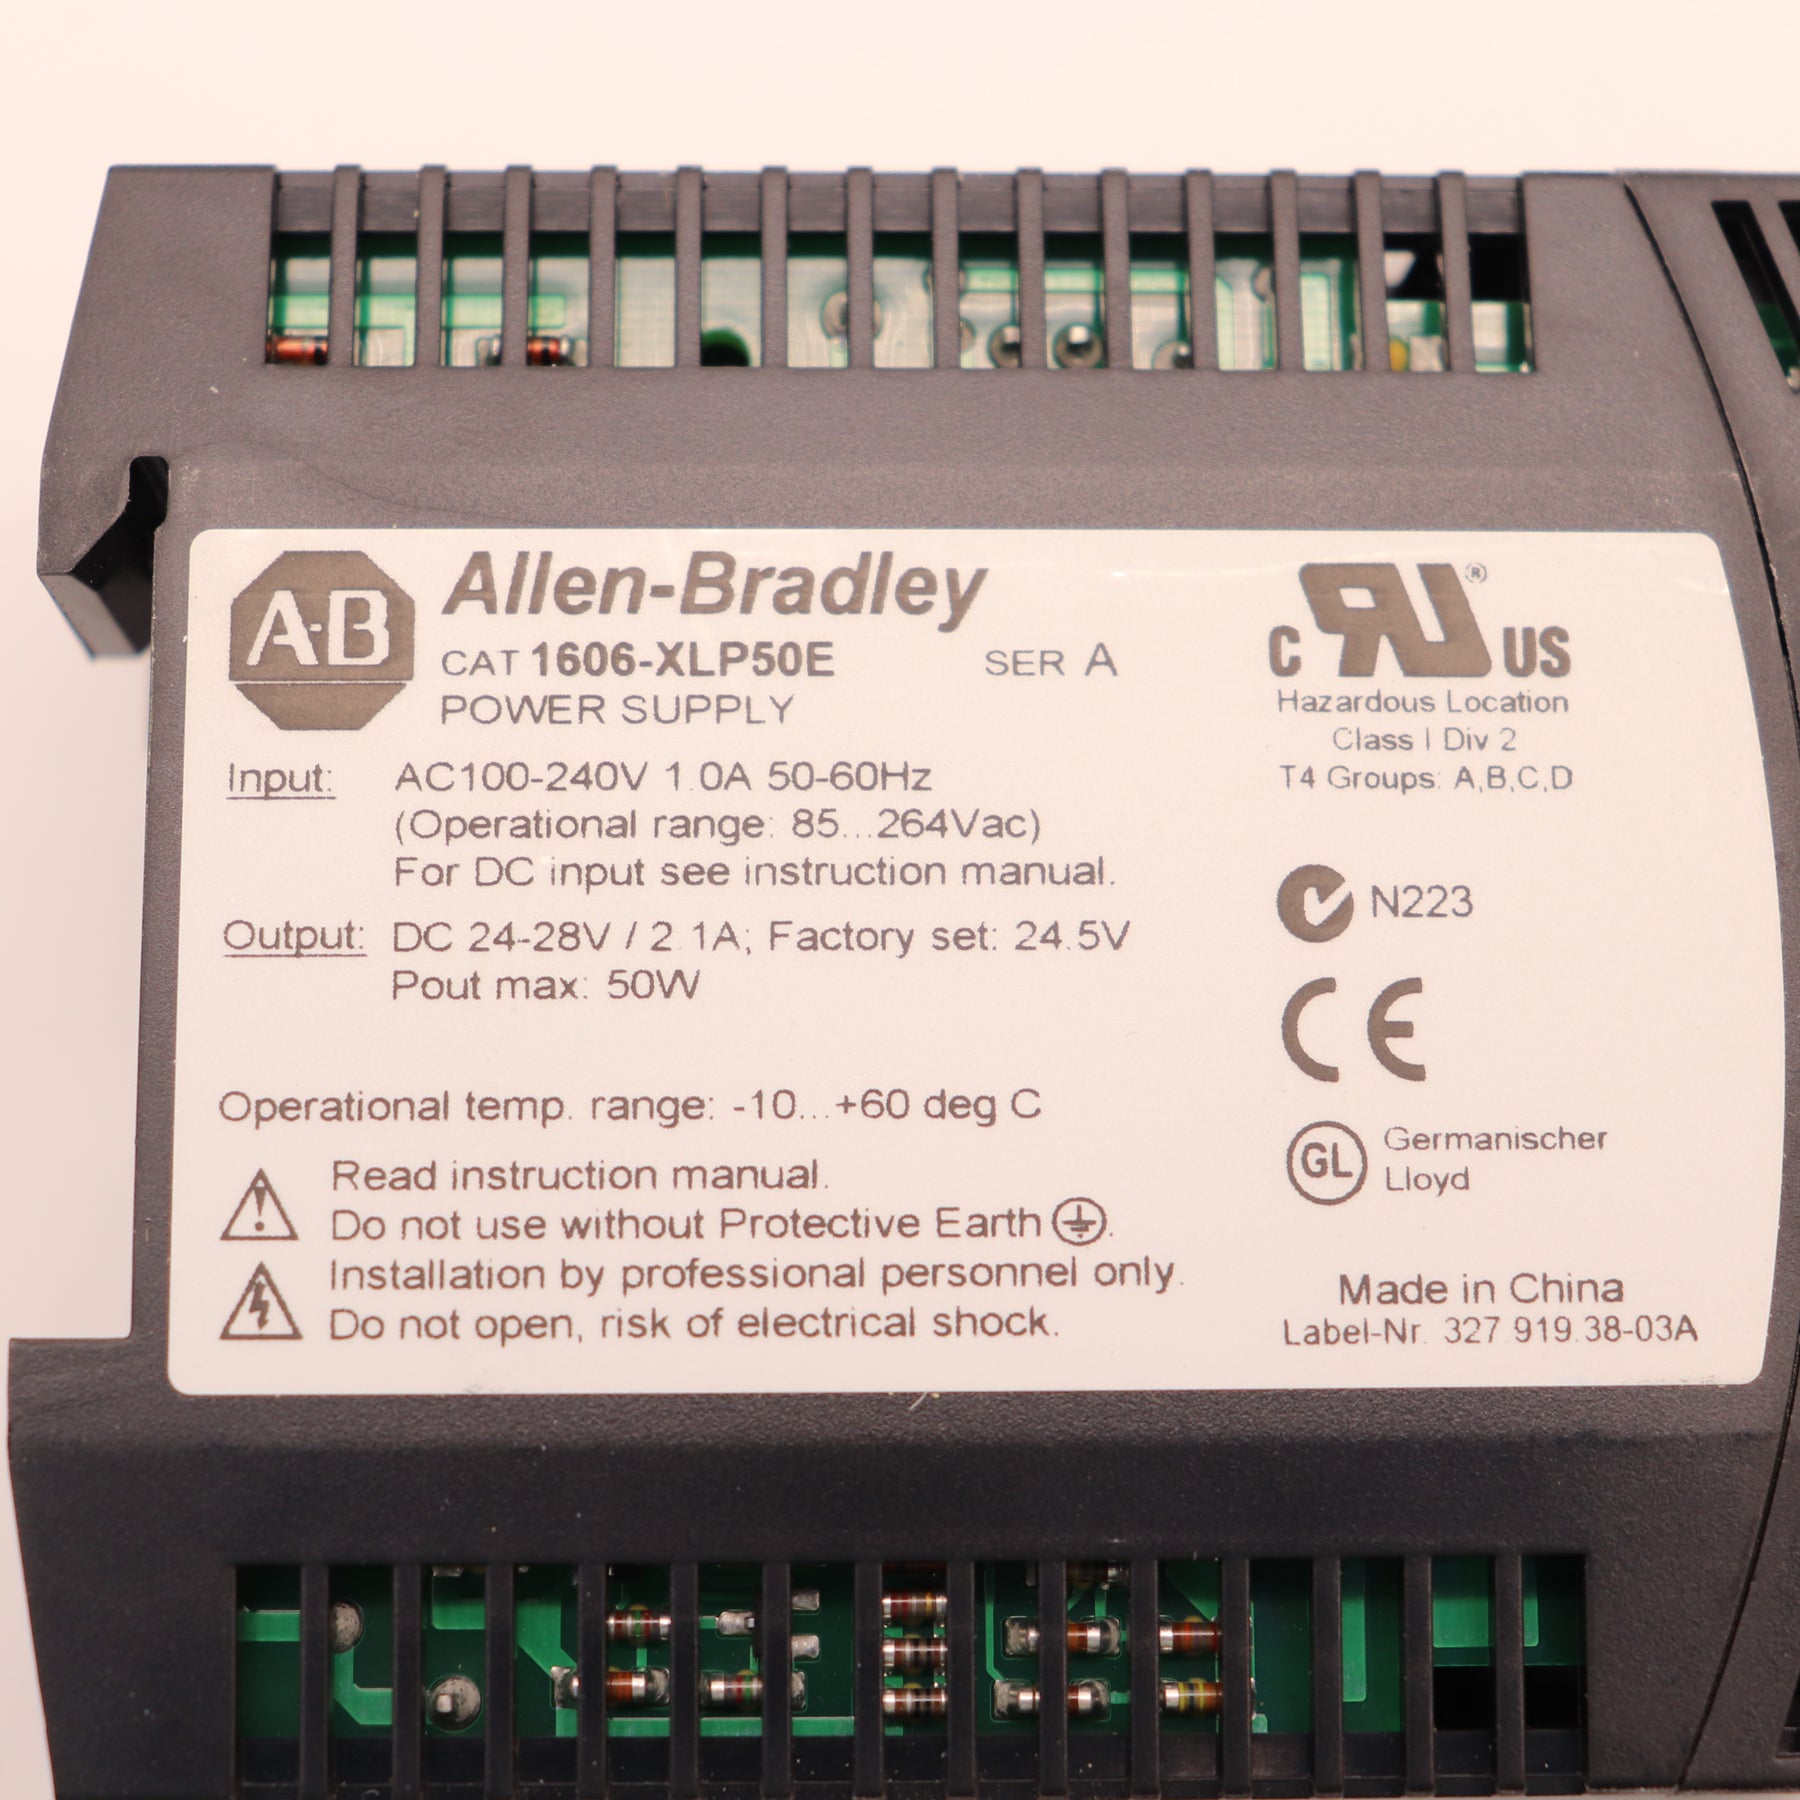 Allen-Bradley 24-28VDC Power Supply 1606-XLP50E Ser A